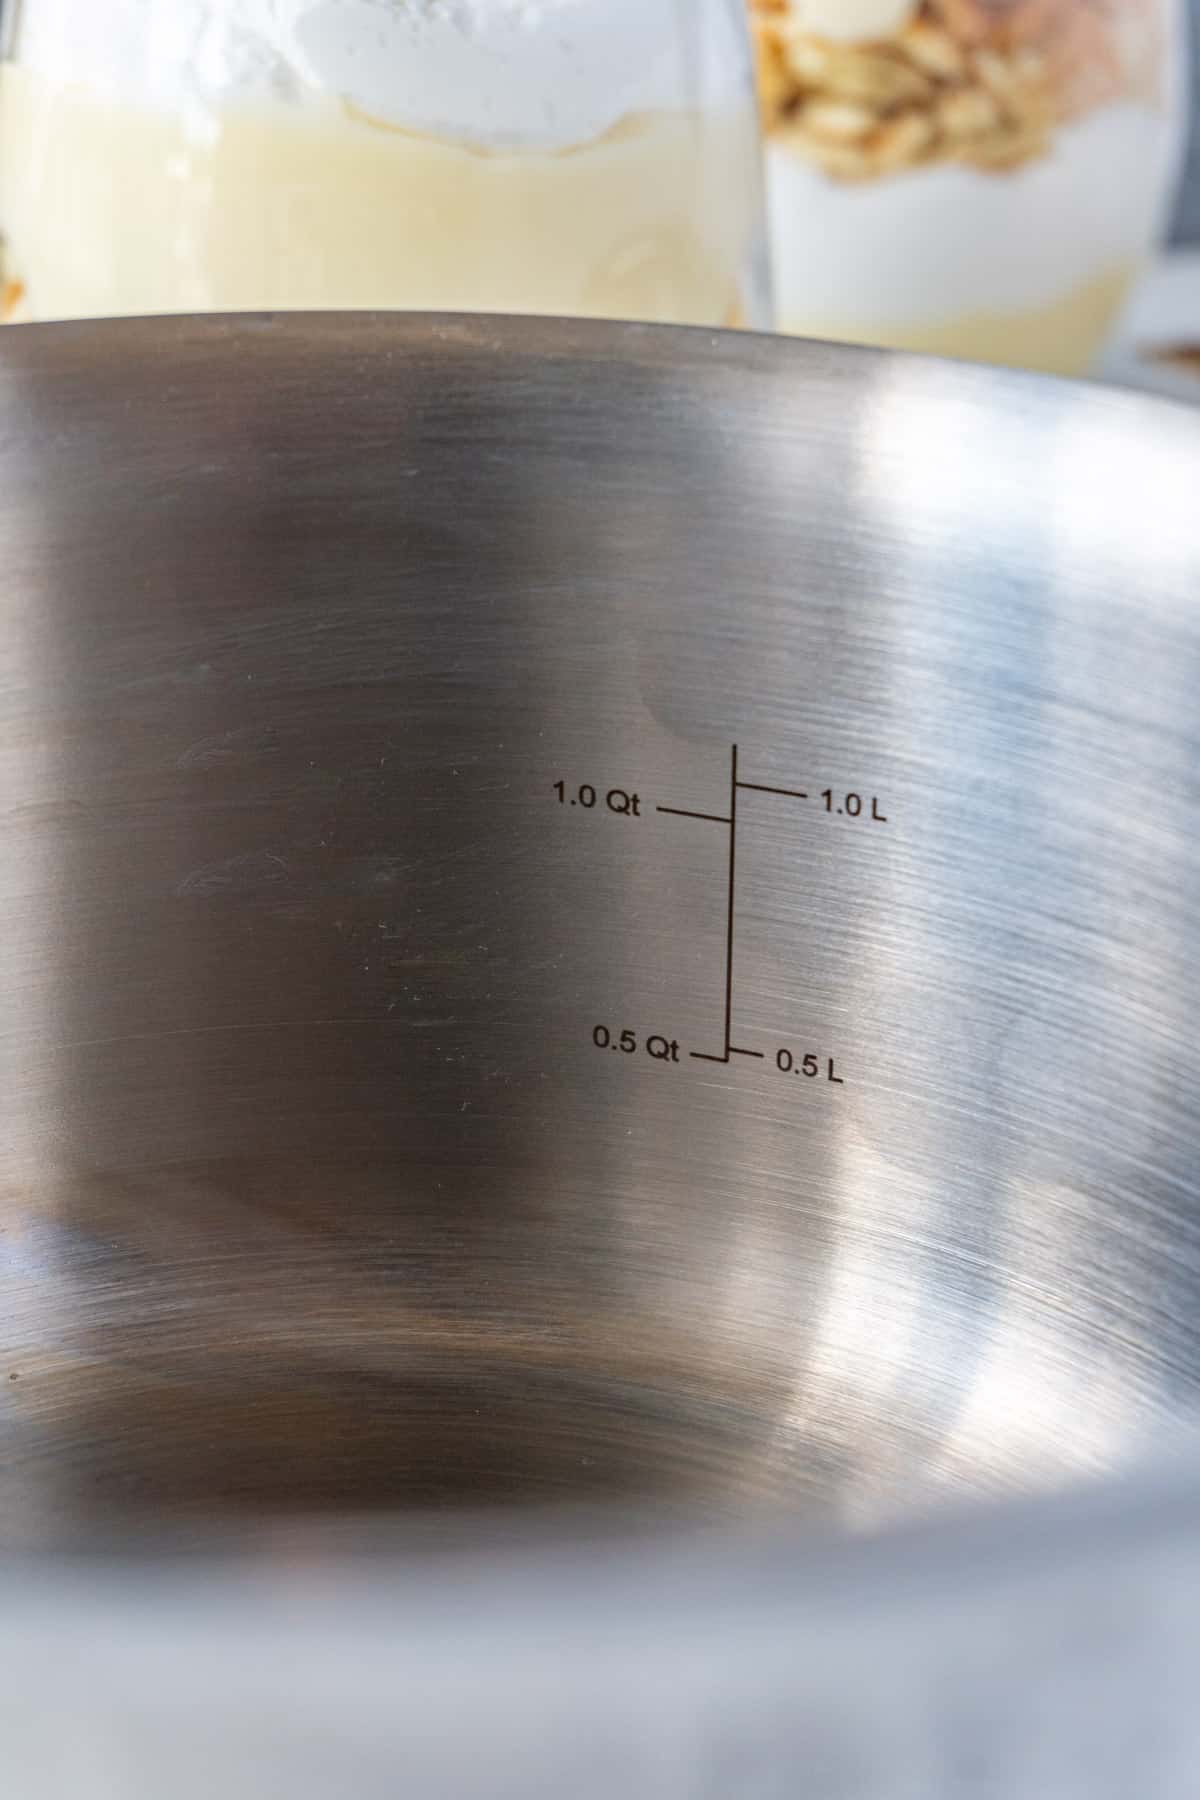 inside of sauce pan showing measurement lines